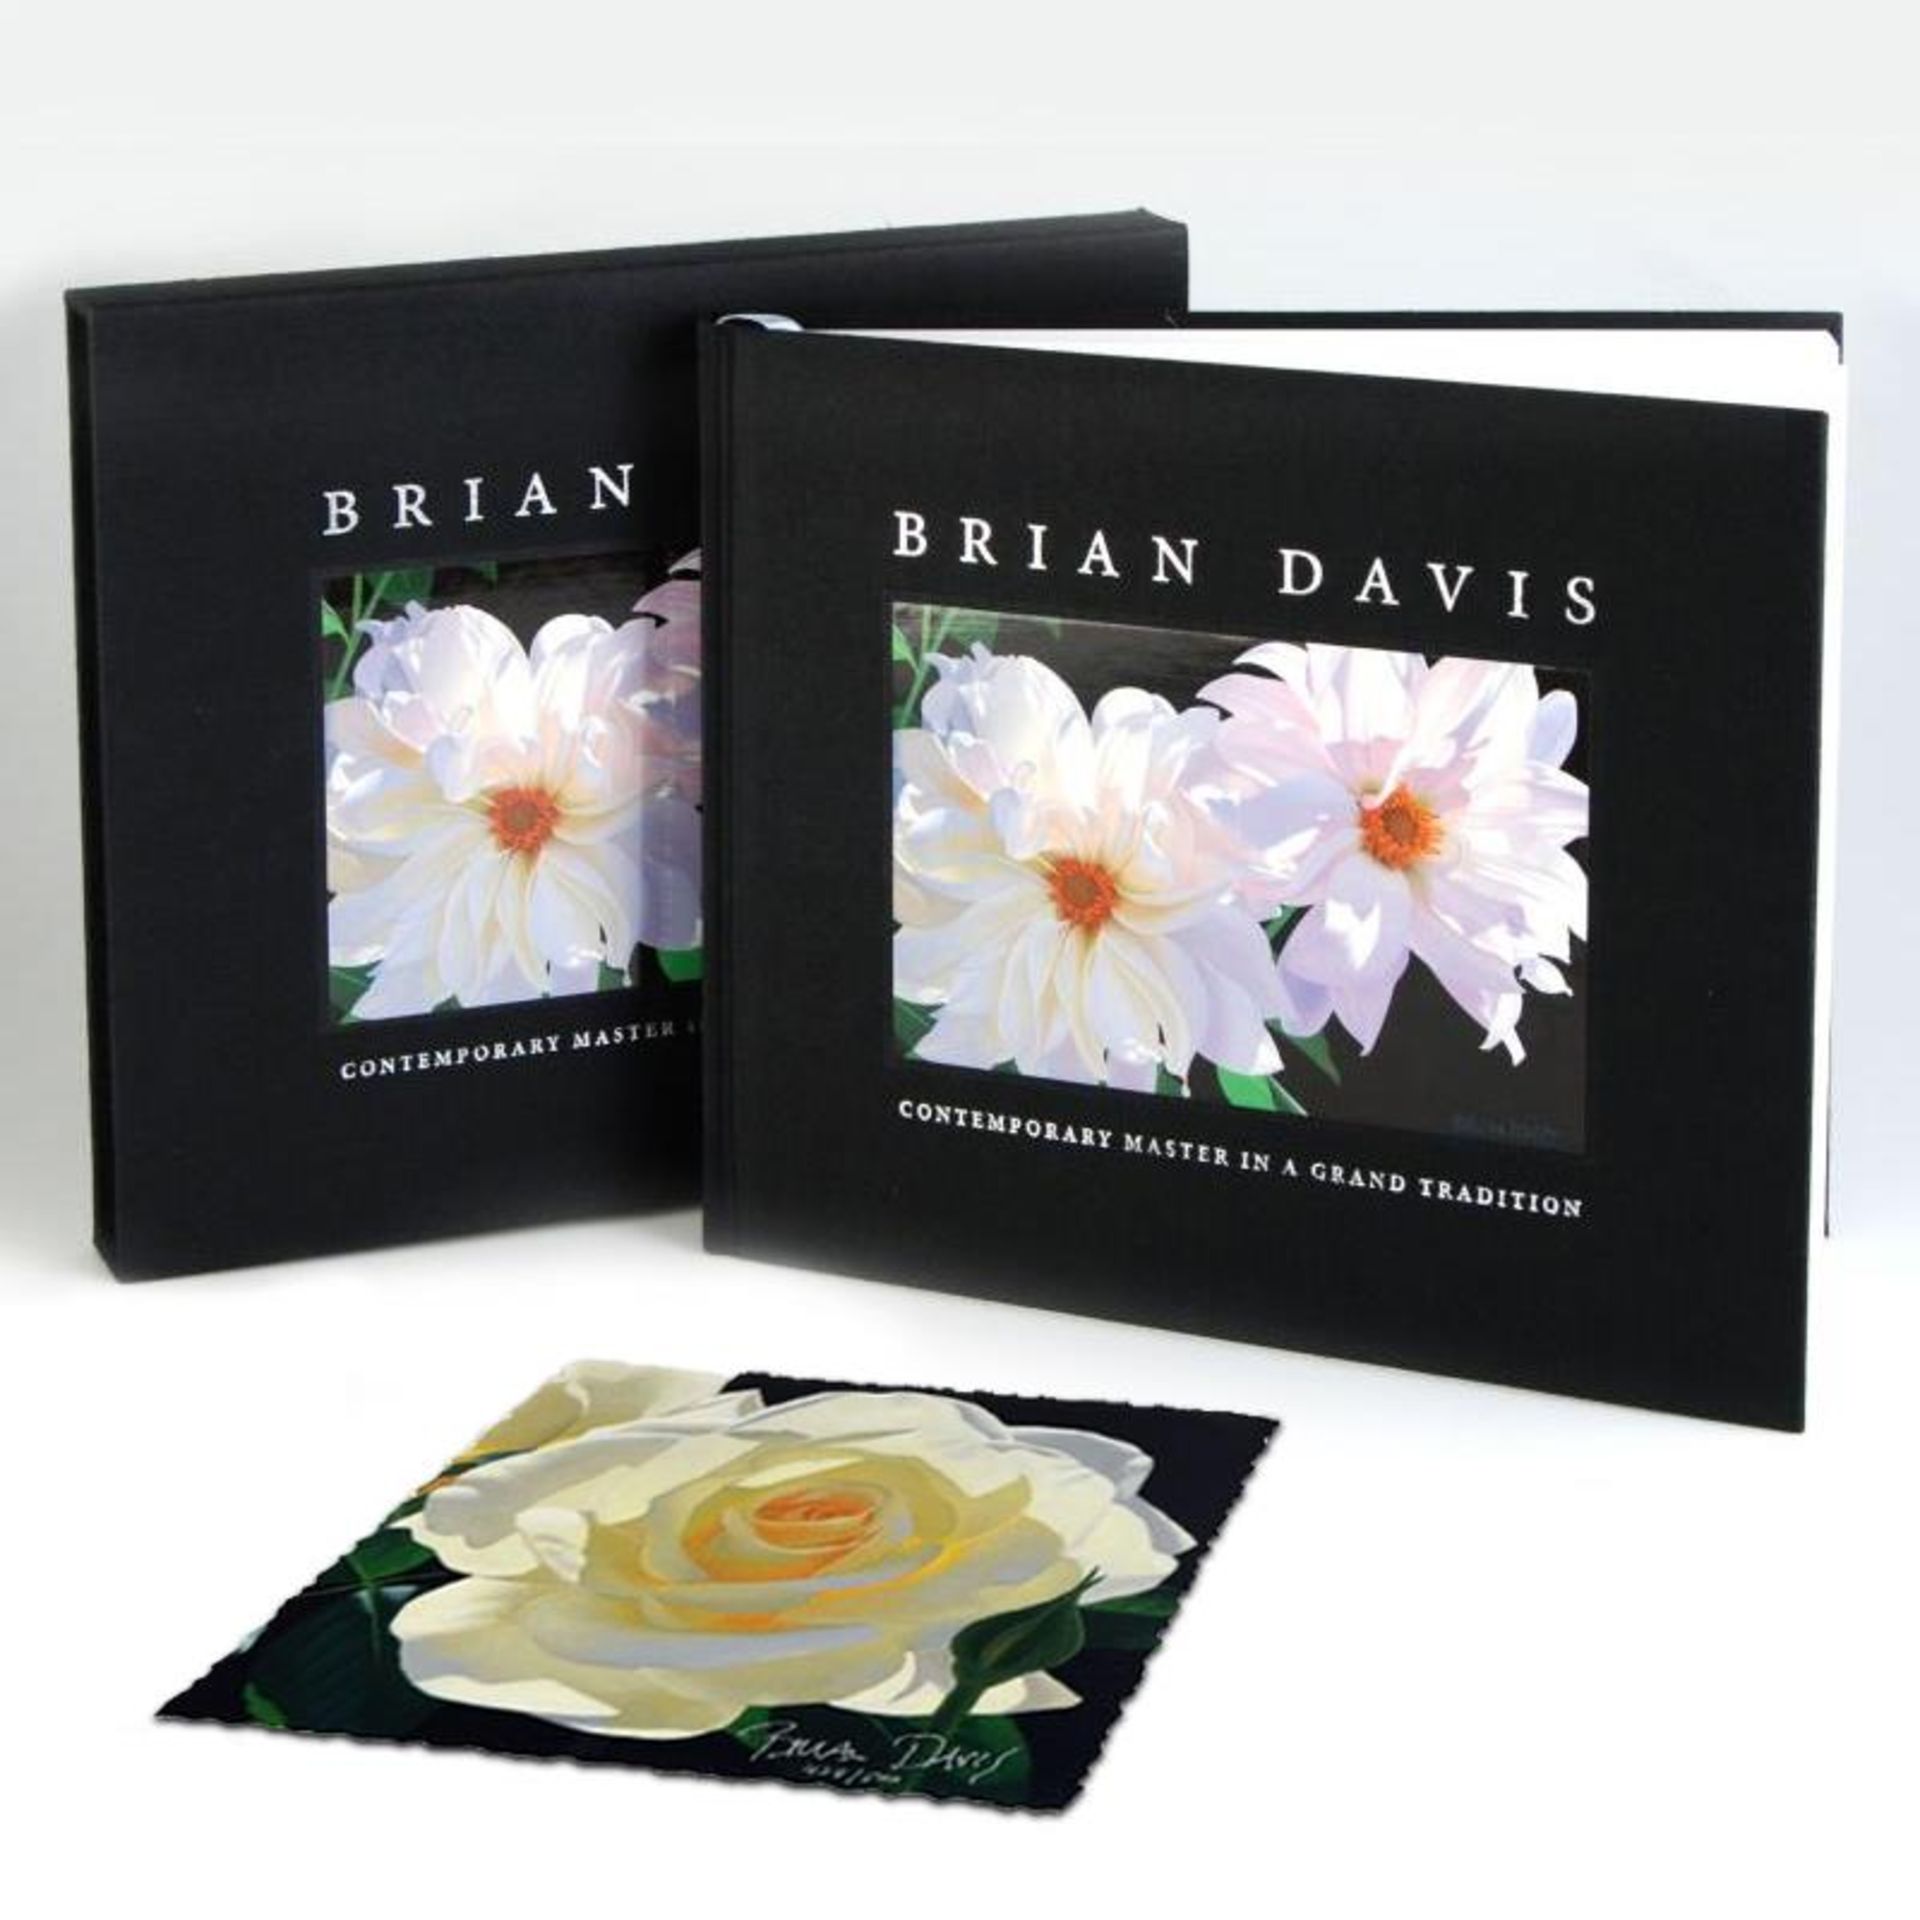 Brian Davis, "Contemporary Master in a Grand Tradition (Deluxe)" Limited Edition